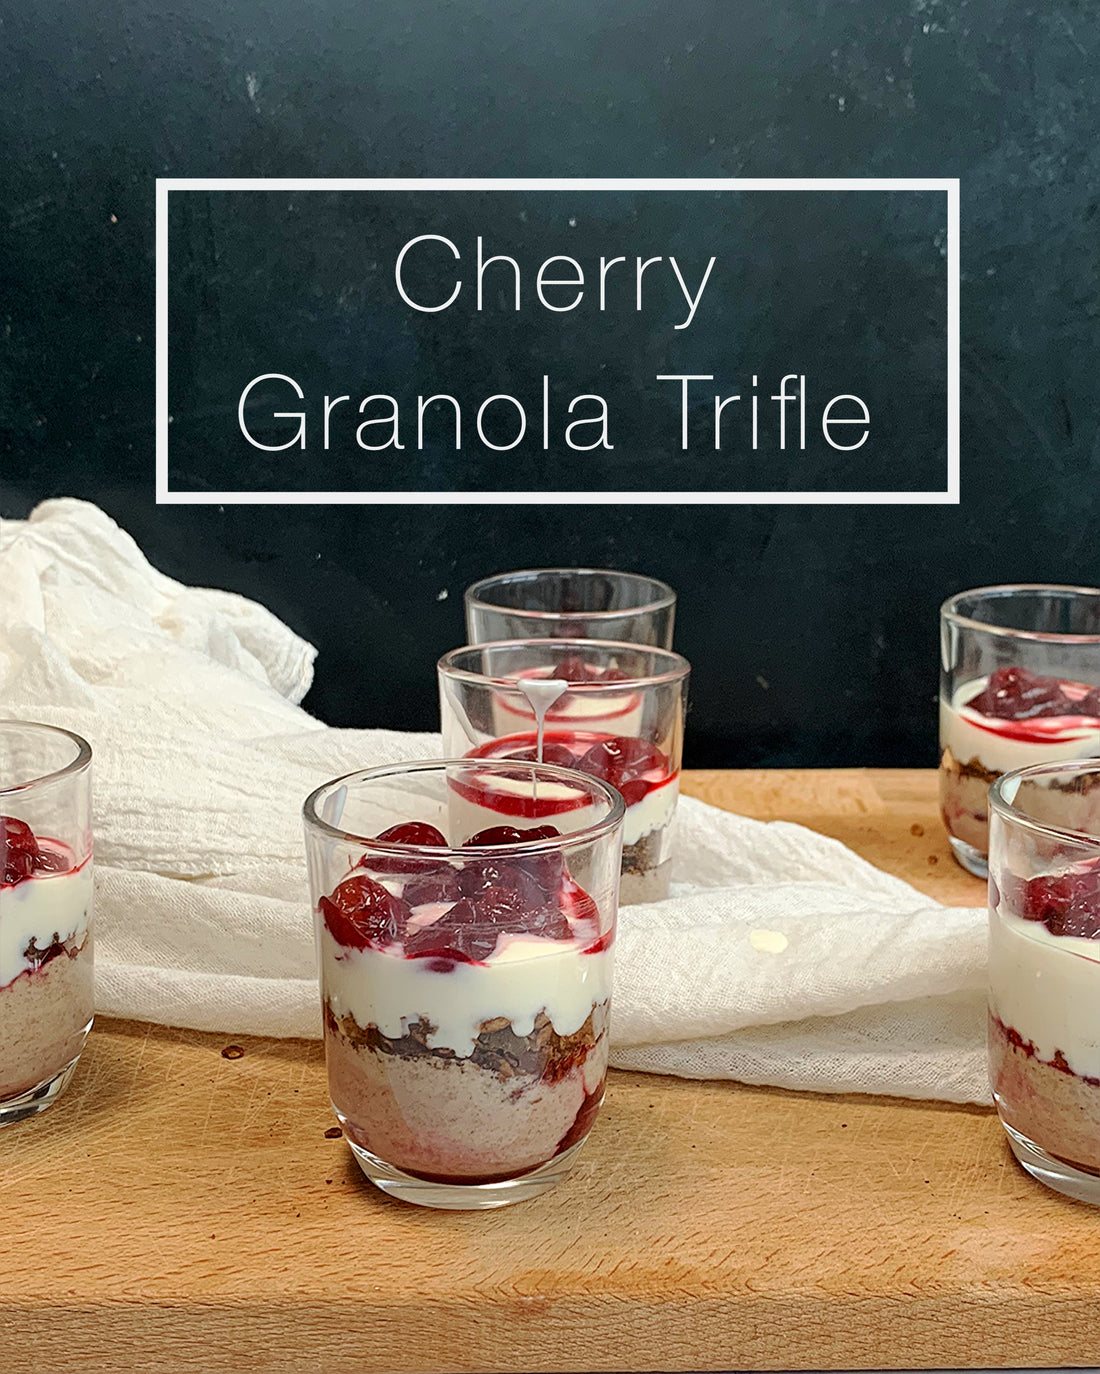 Cherry Granola Trifle